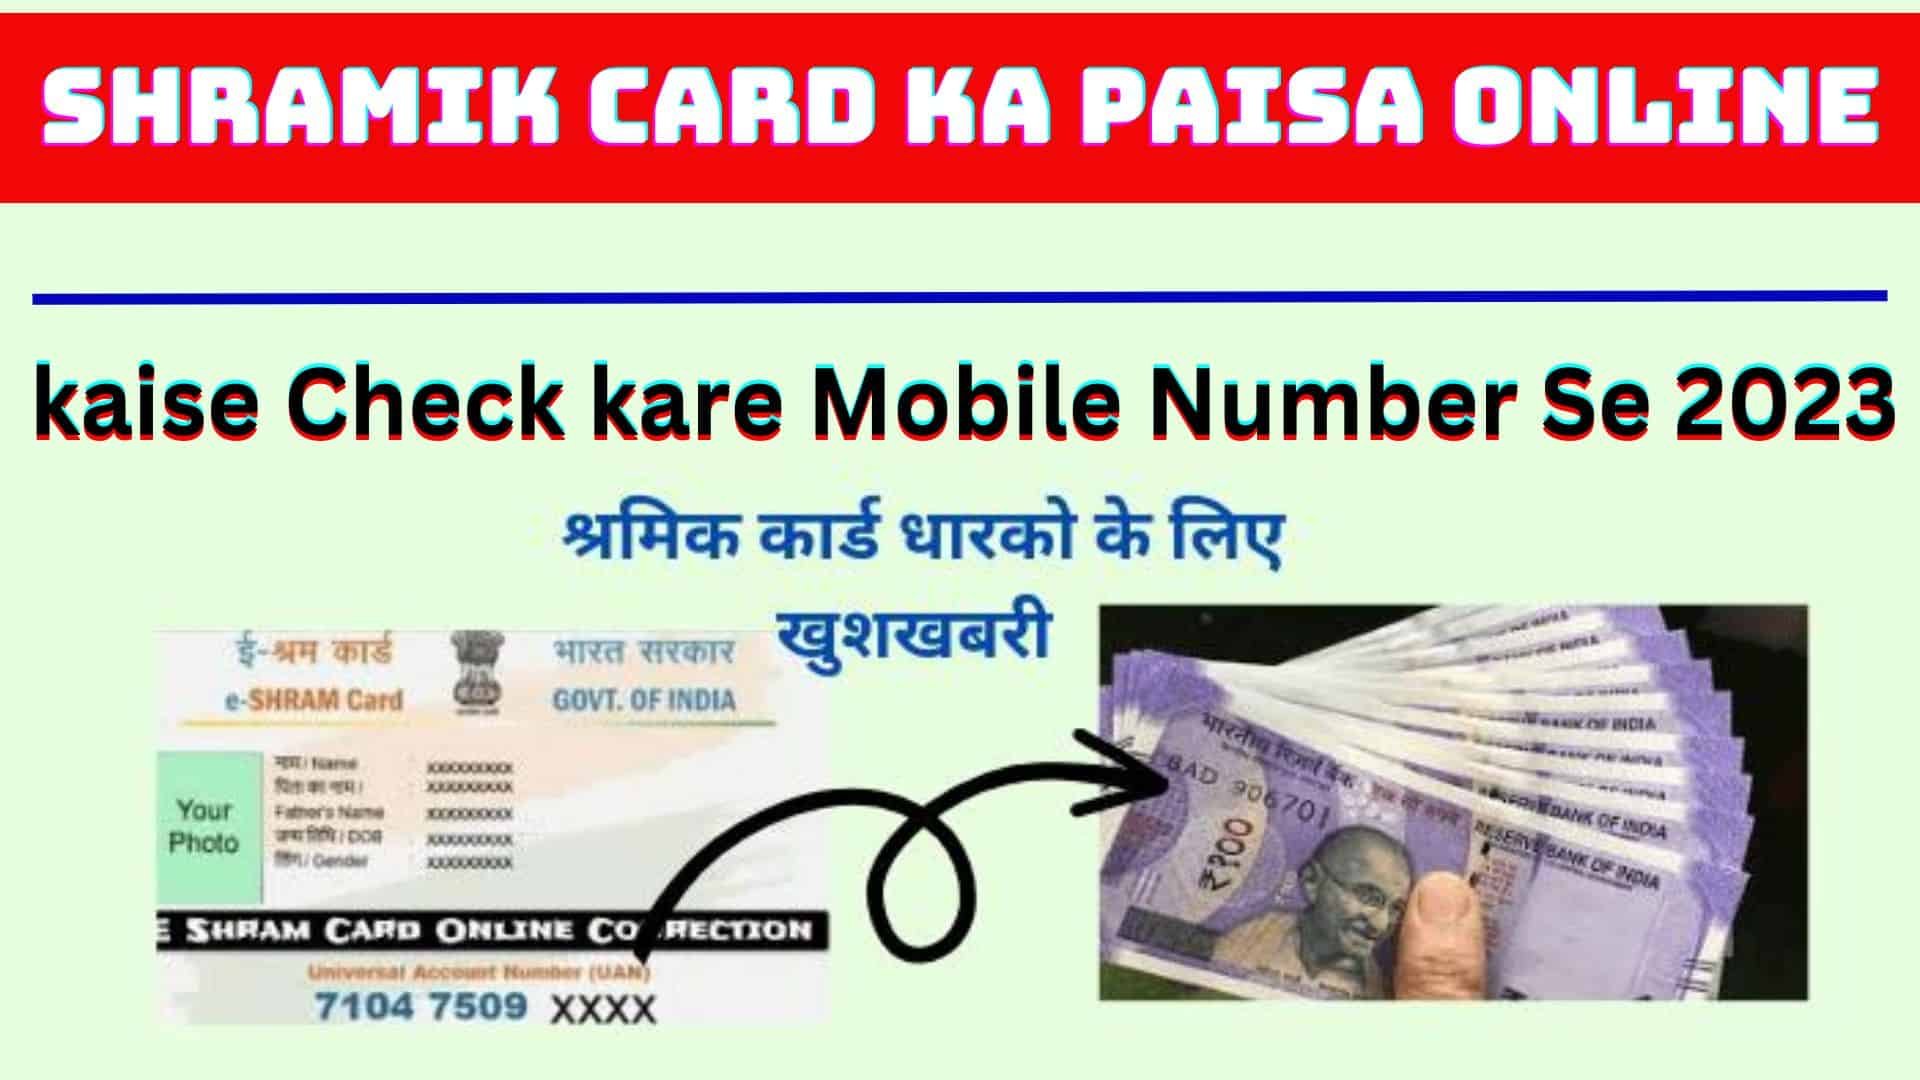 Shramik Card Ka Paisa Online kaise Check kare Mobile Number Se 2023